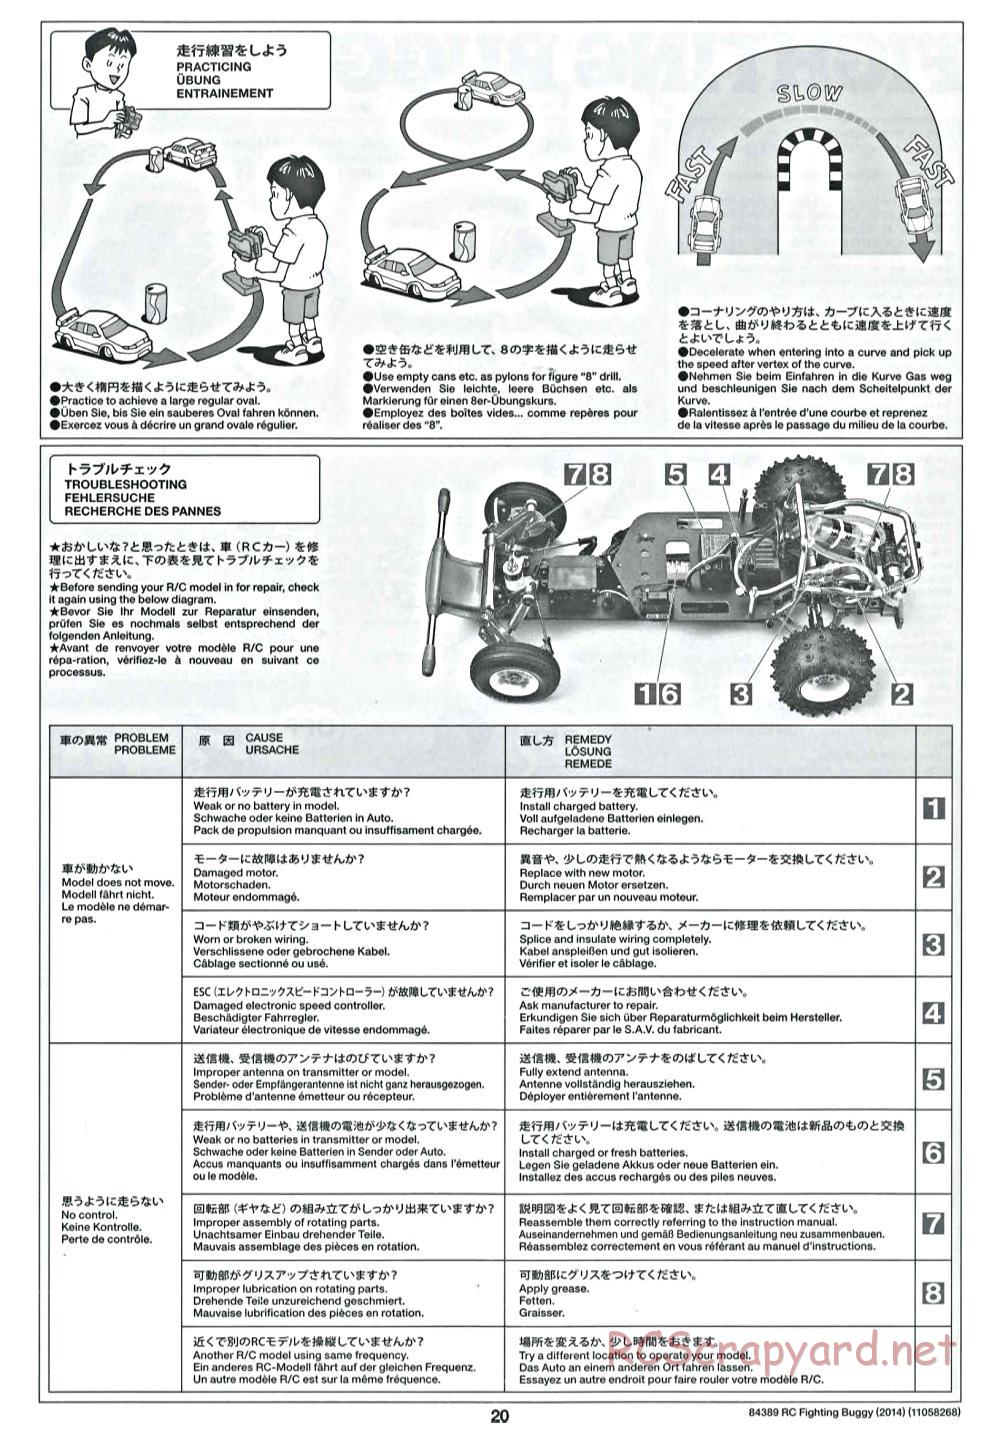 Tamiya - Fighting Buggy (2014) Chassis - Manual - Page 20